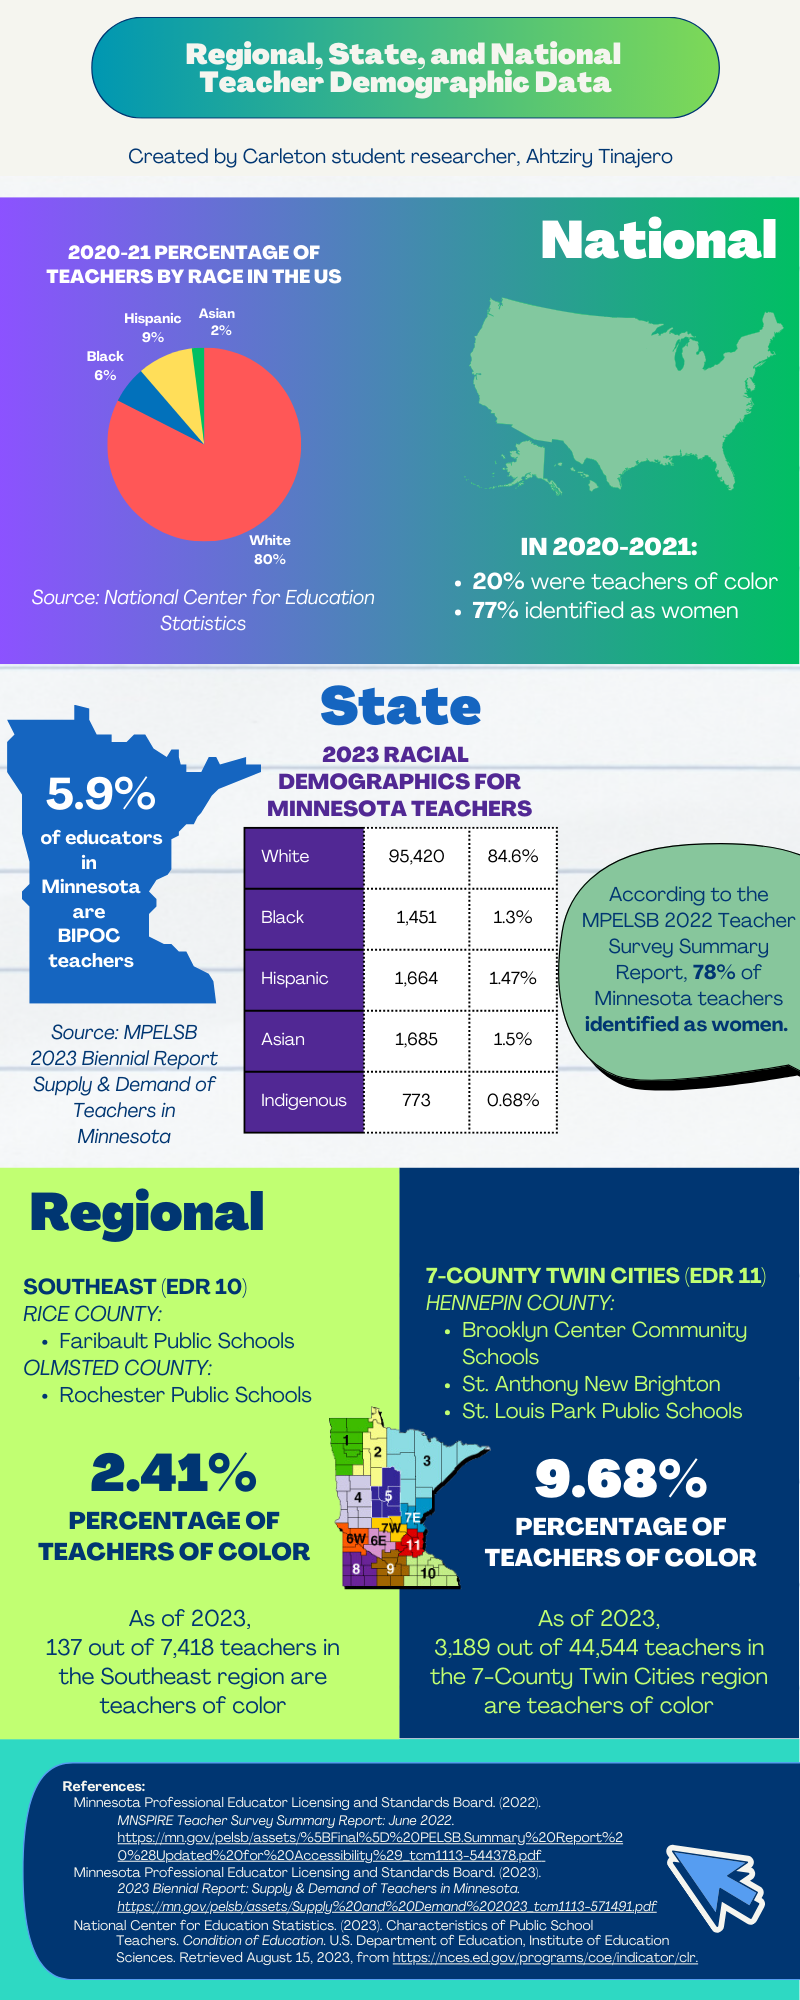 Regional, State, and National Teacher Demographic Data